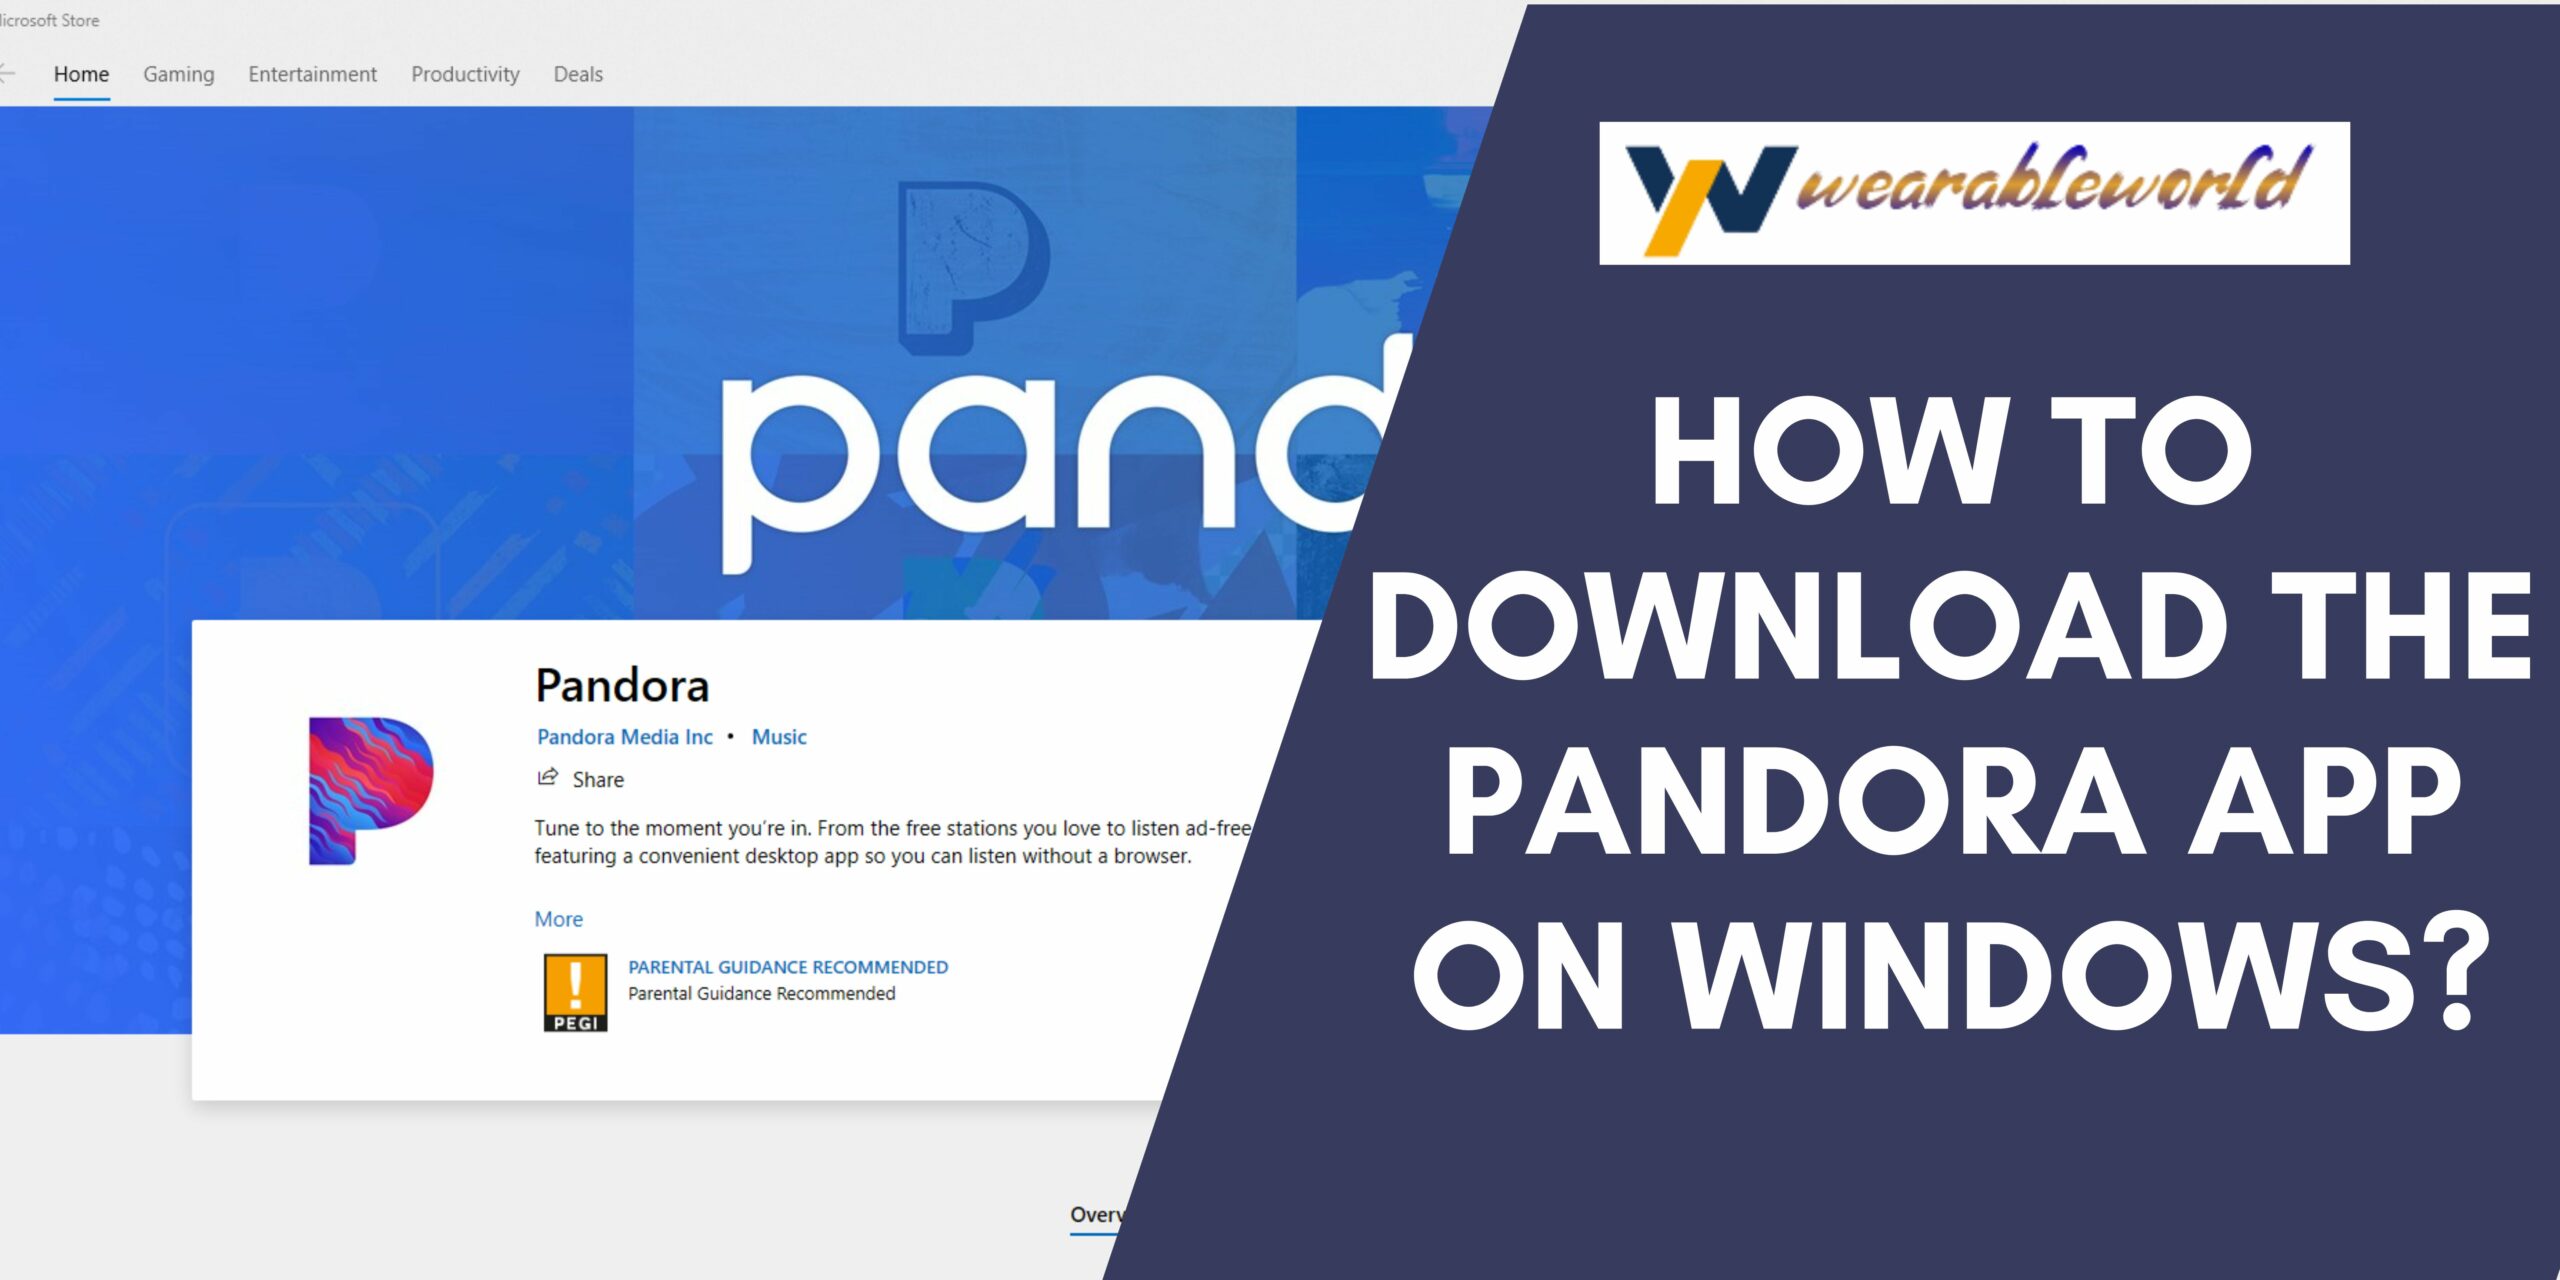 Download the Pandora app on Windows